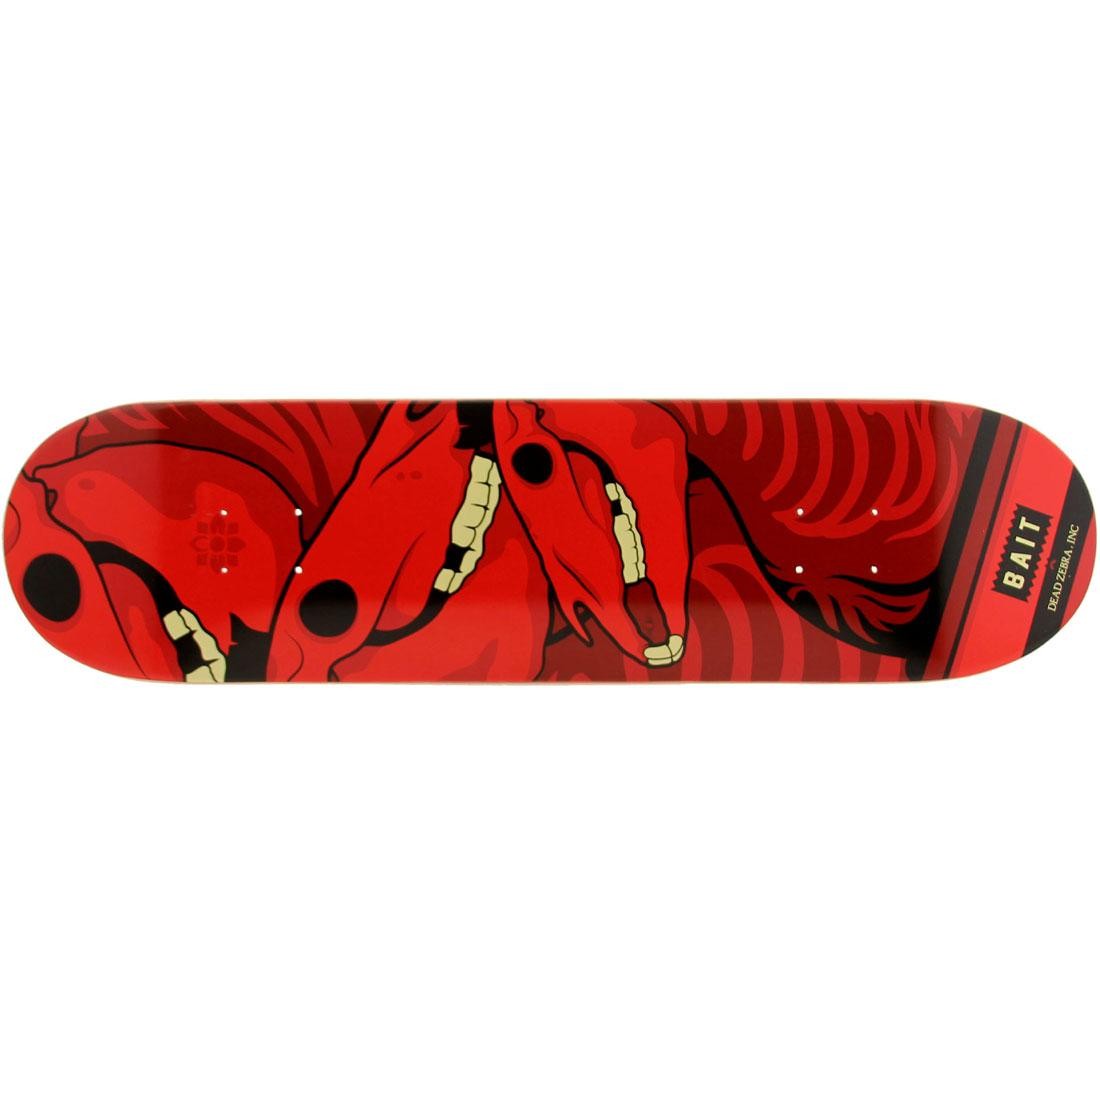 BAIT x Dead Zebra The Last Knight Skateboard Deck (red / green) - BAIT SDCC Exclusive